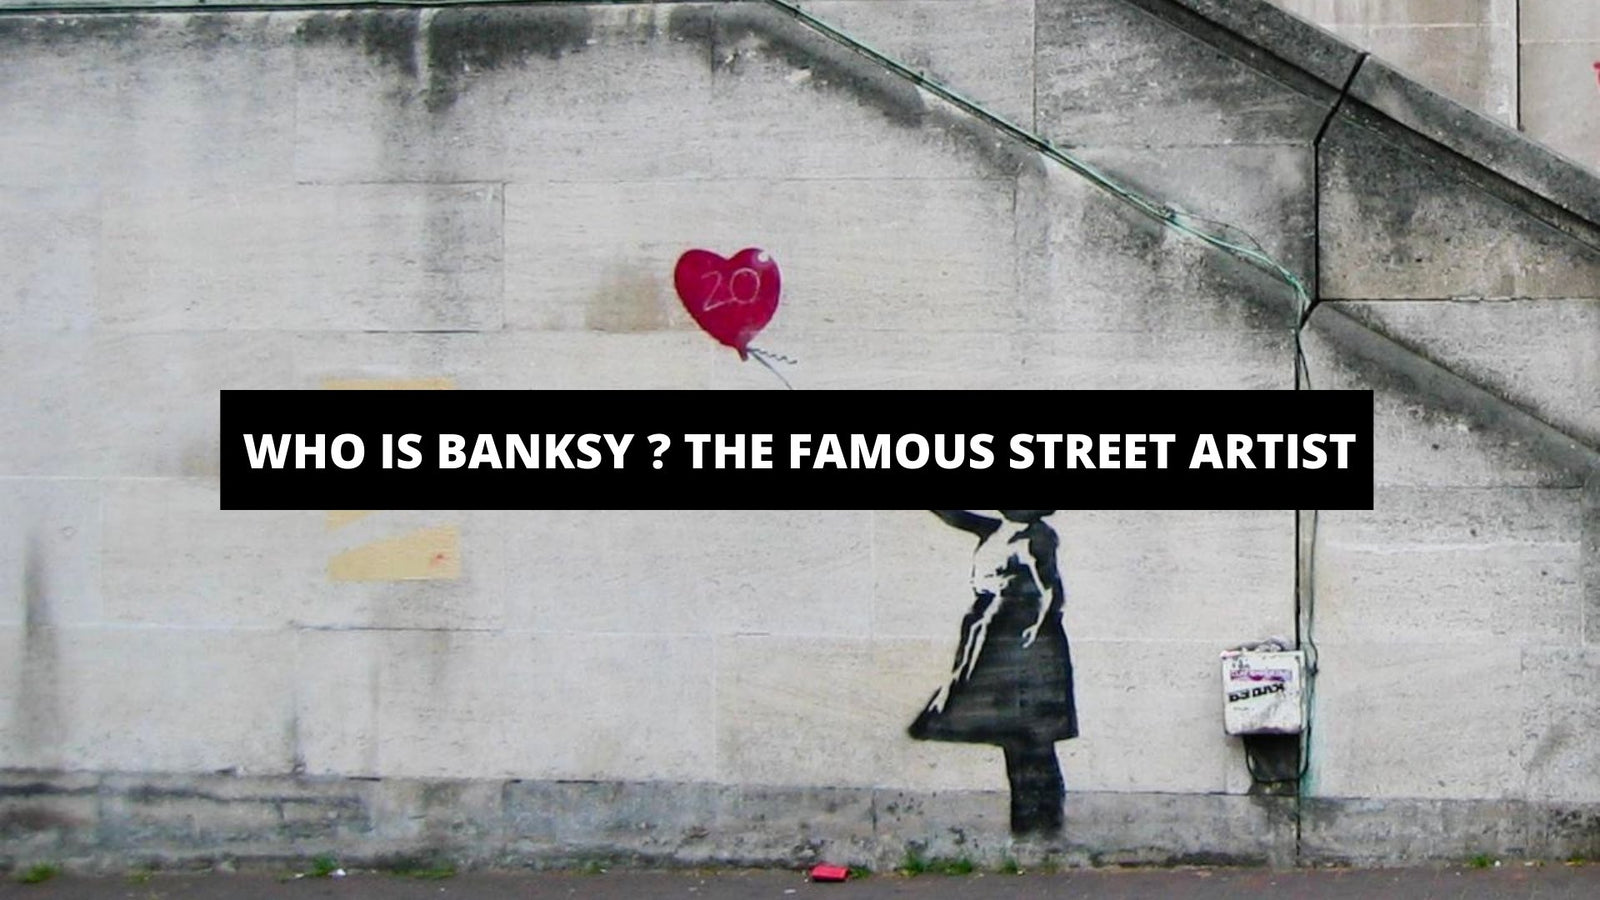 banksy revealed himself